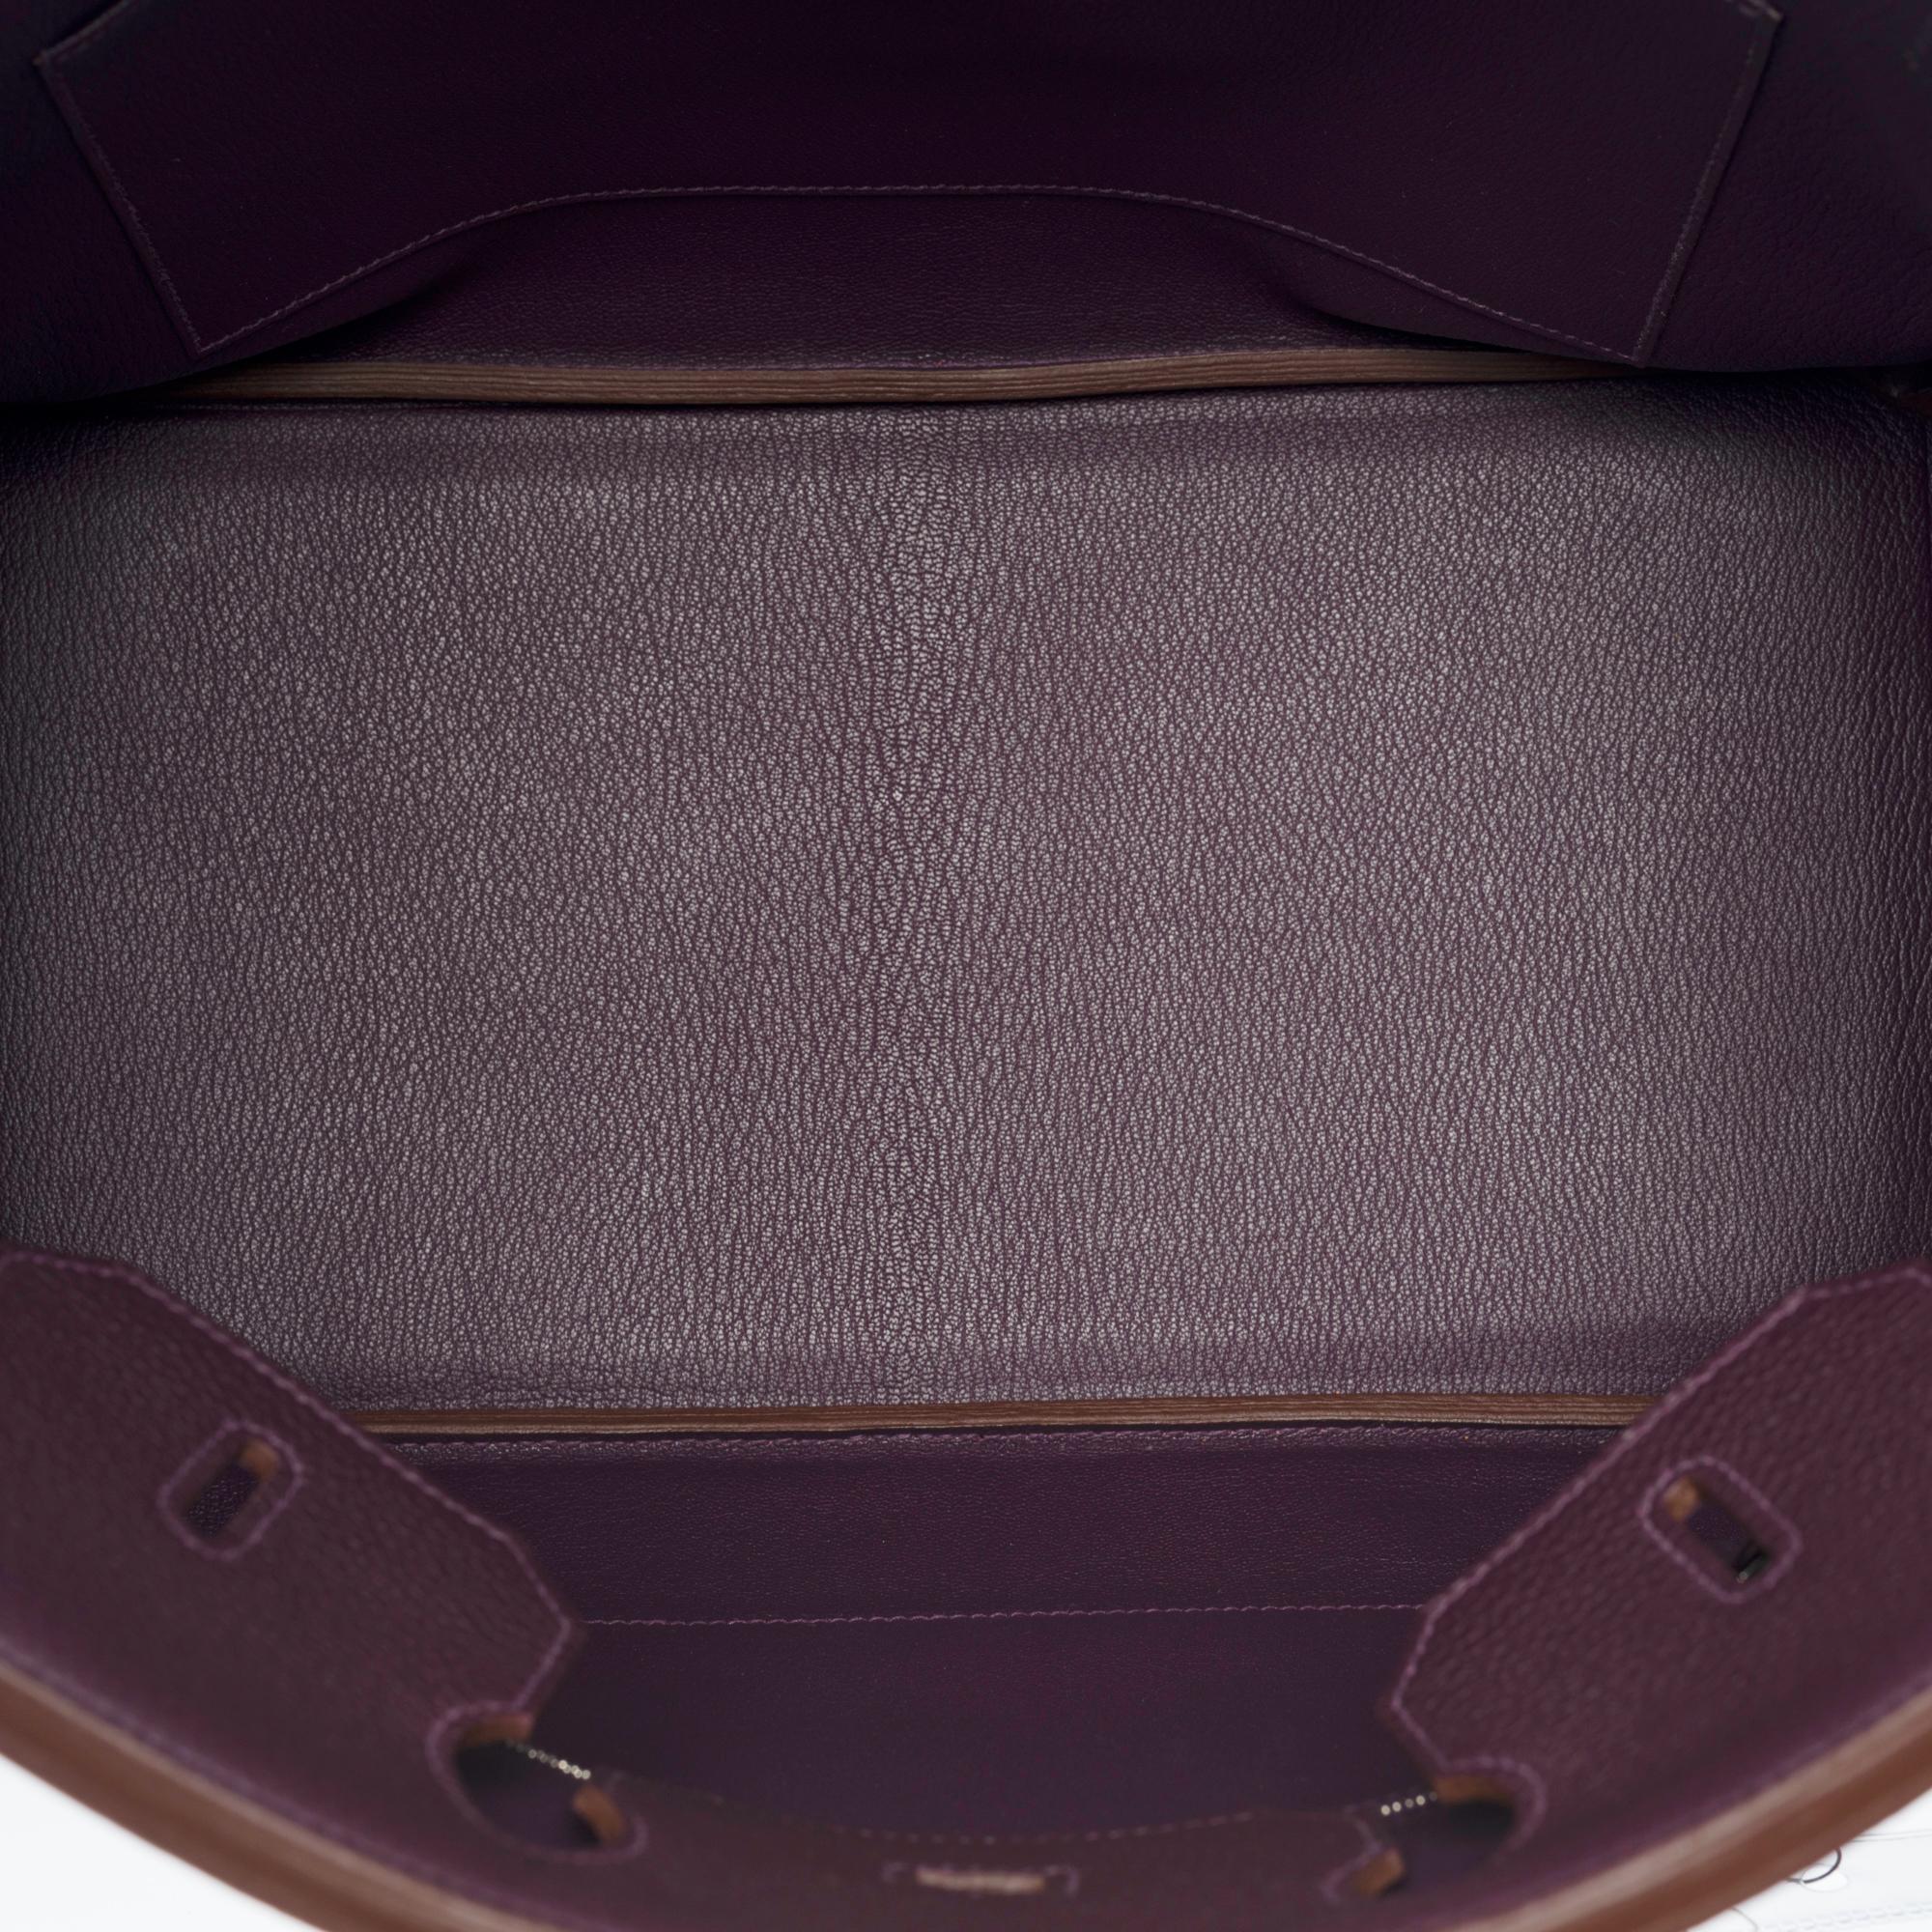 Amazing Hermès Birkin 35 handbag in raisin Togo leather, SHW 2